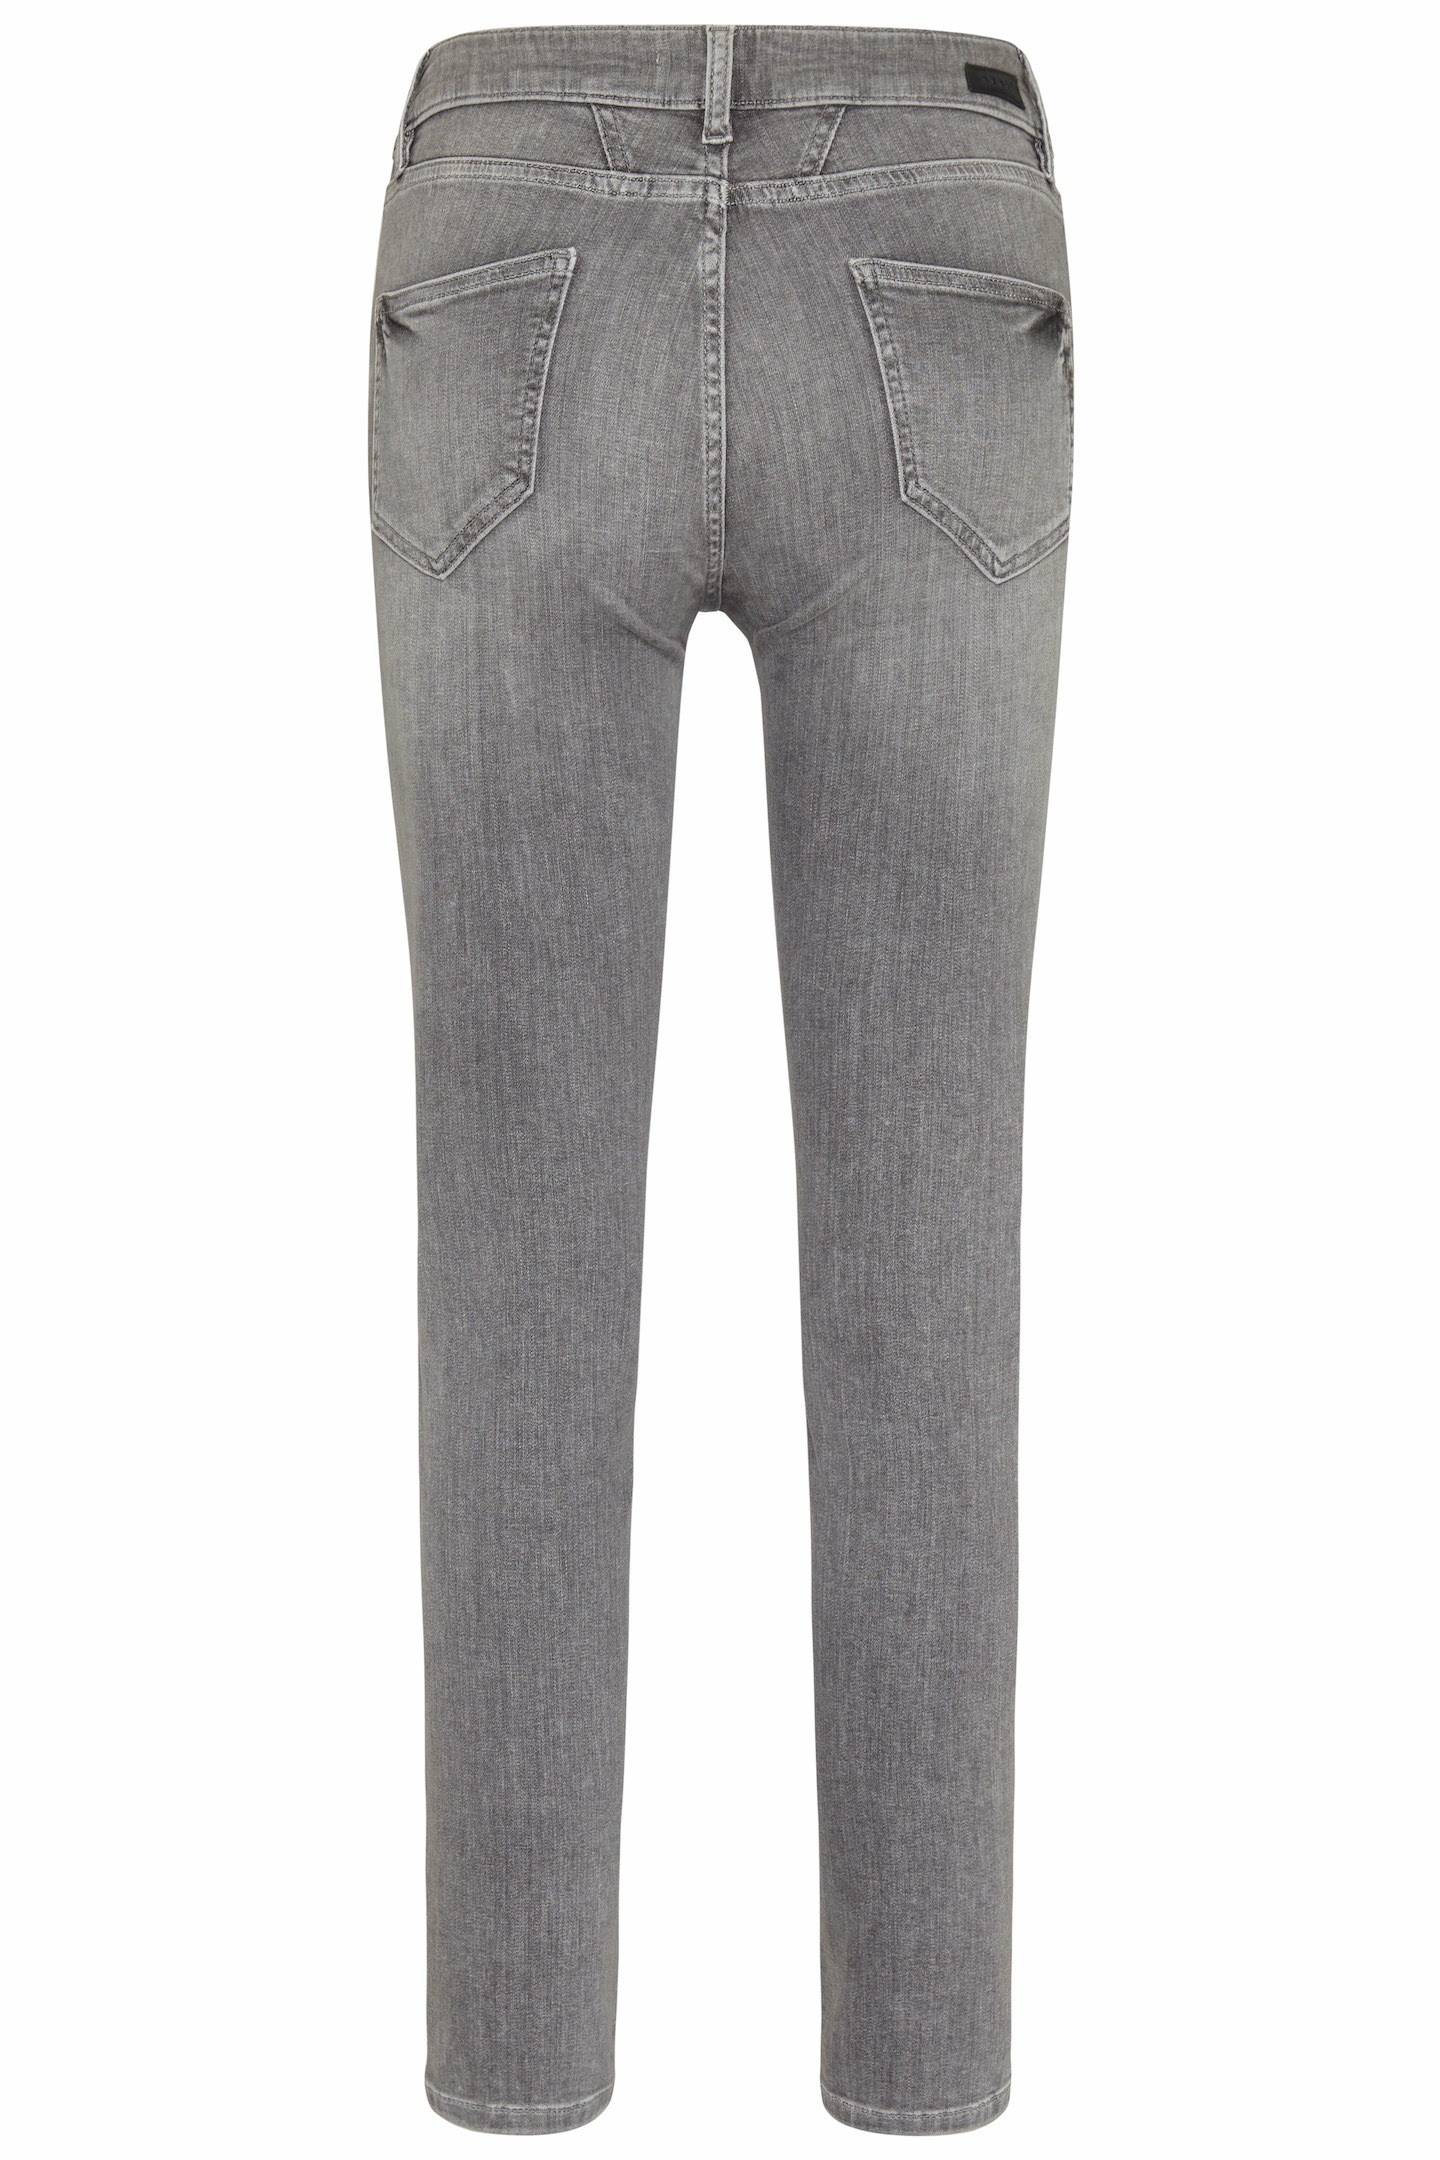 bugatti 5-Pocket-Jeans, leichte Used-Waschung online | Jeans